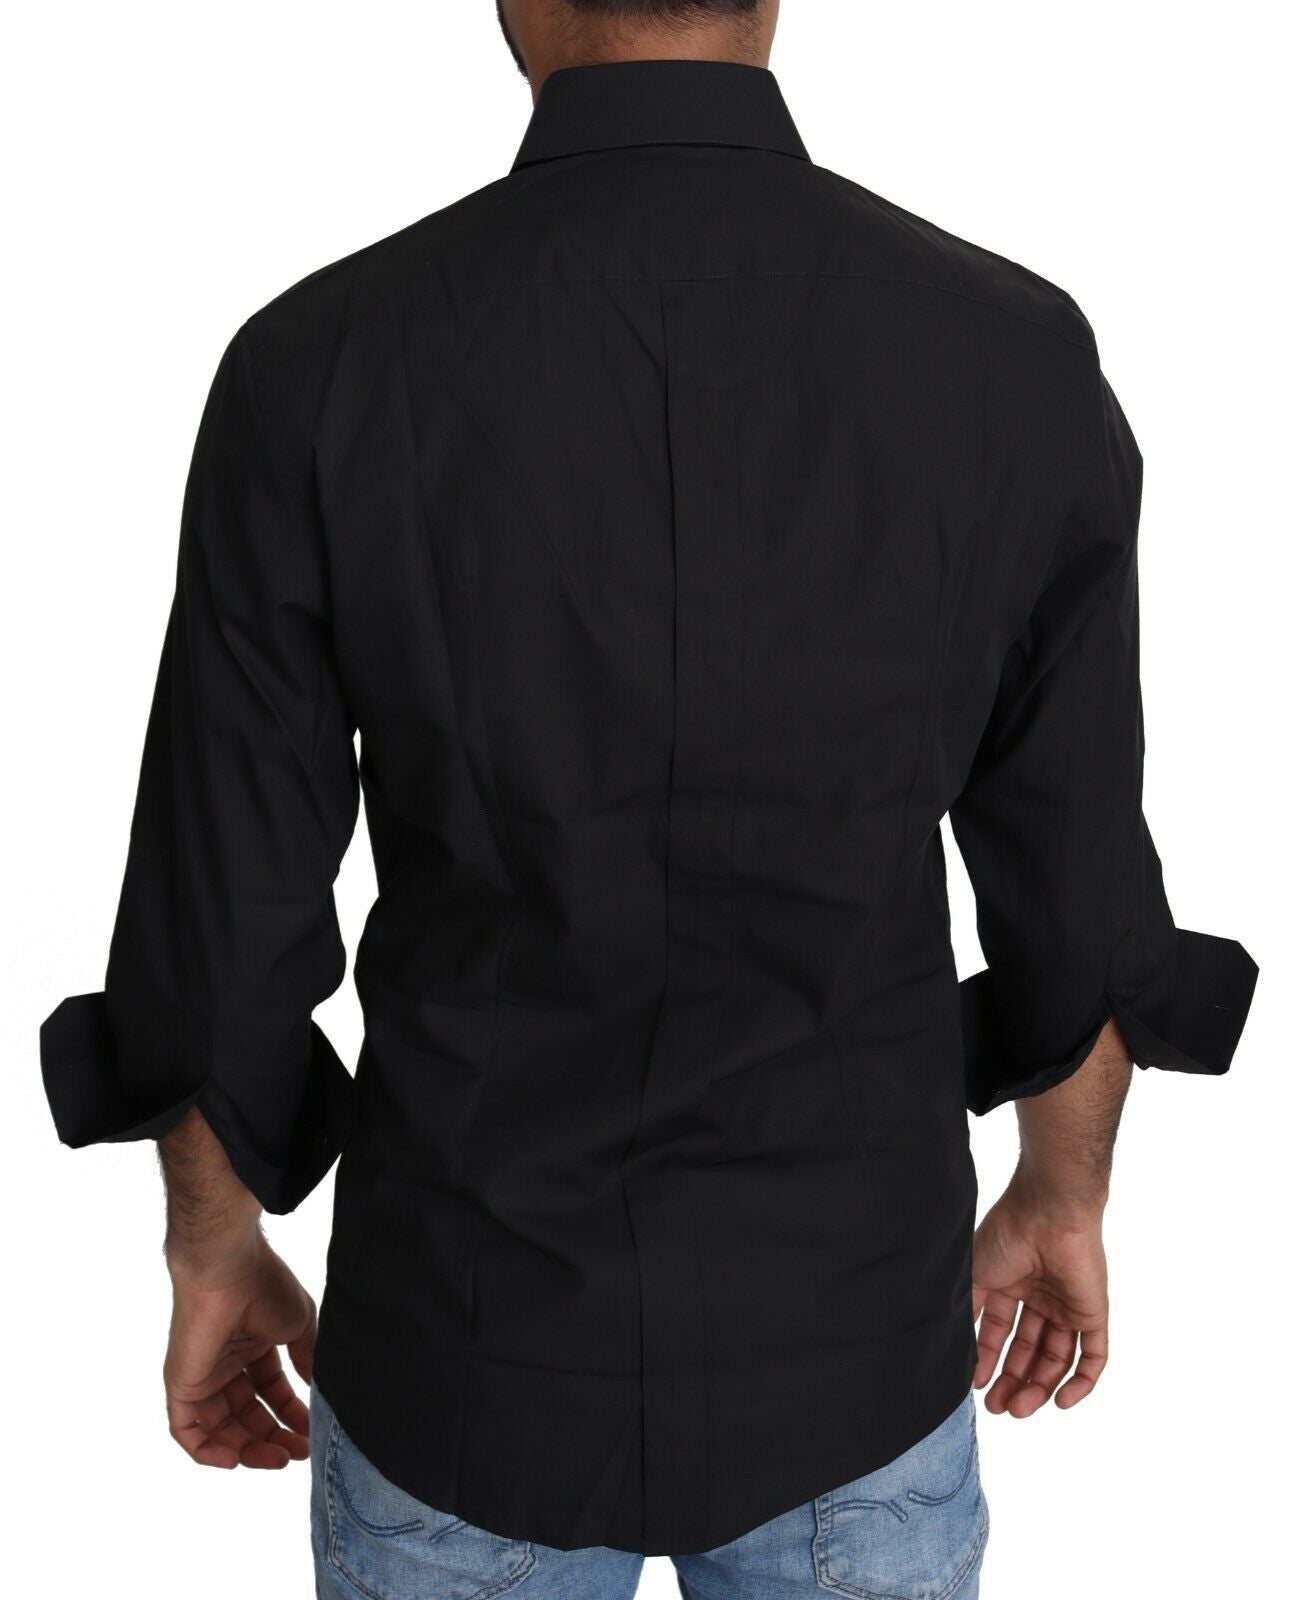 Elegant Black Slim Fit Dress Shirt